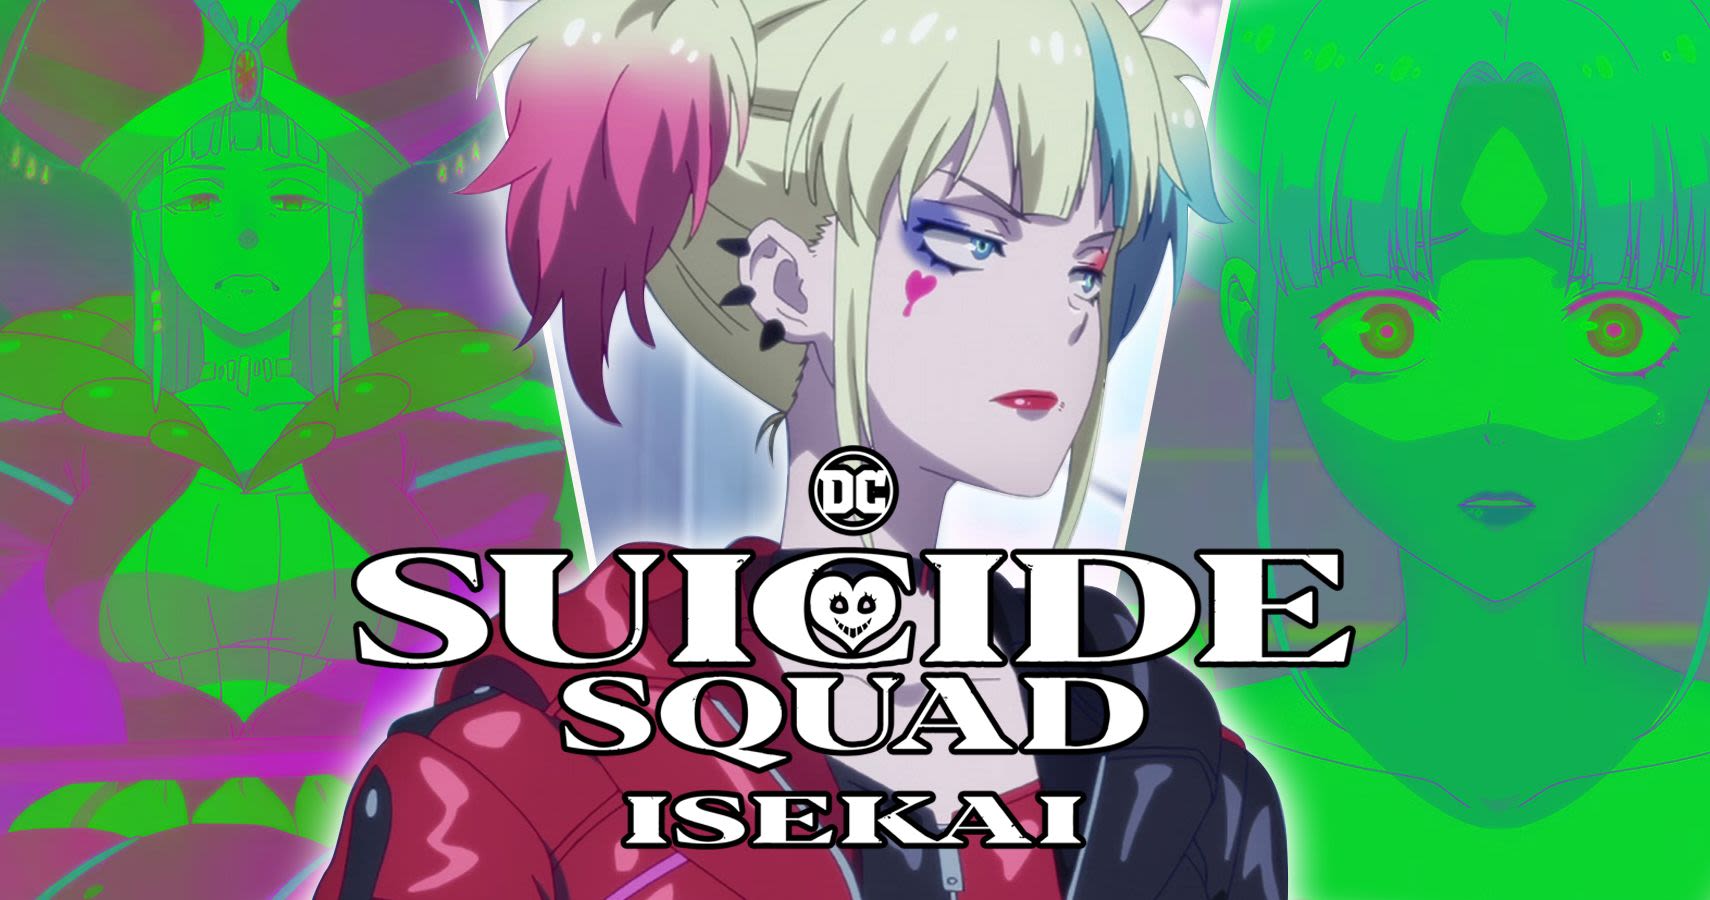 Suicide Squad Isekai Episode 8 Is a Fun if Sluggish Filler Episode